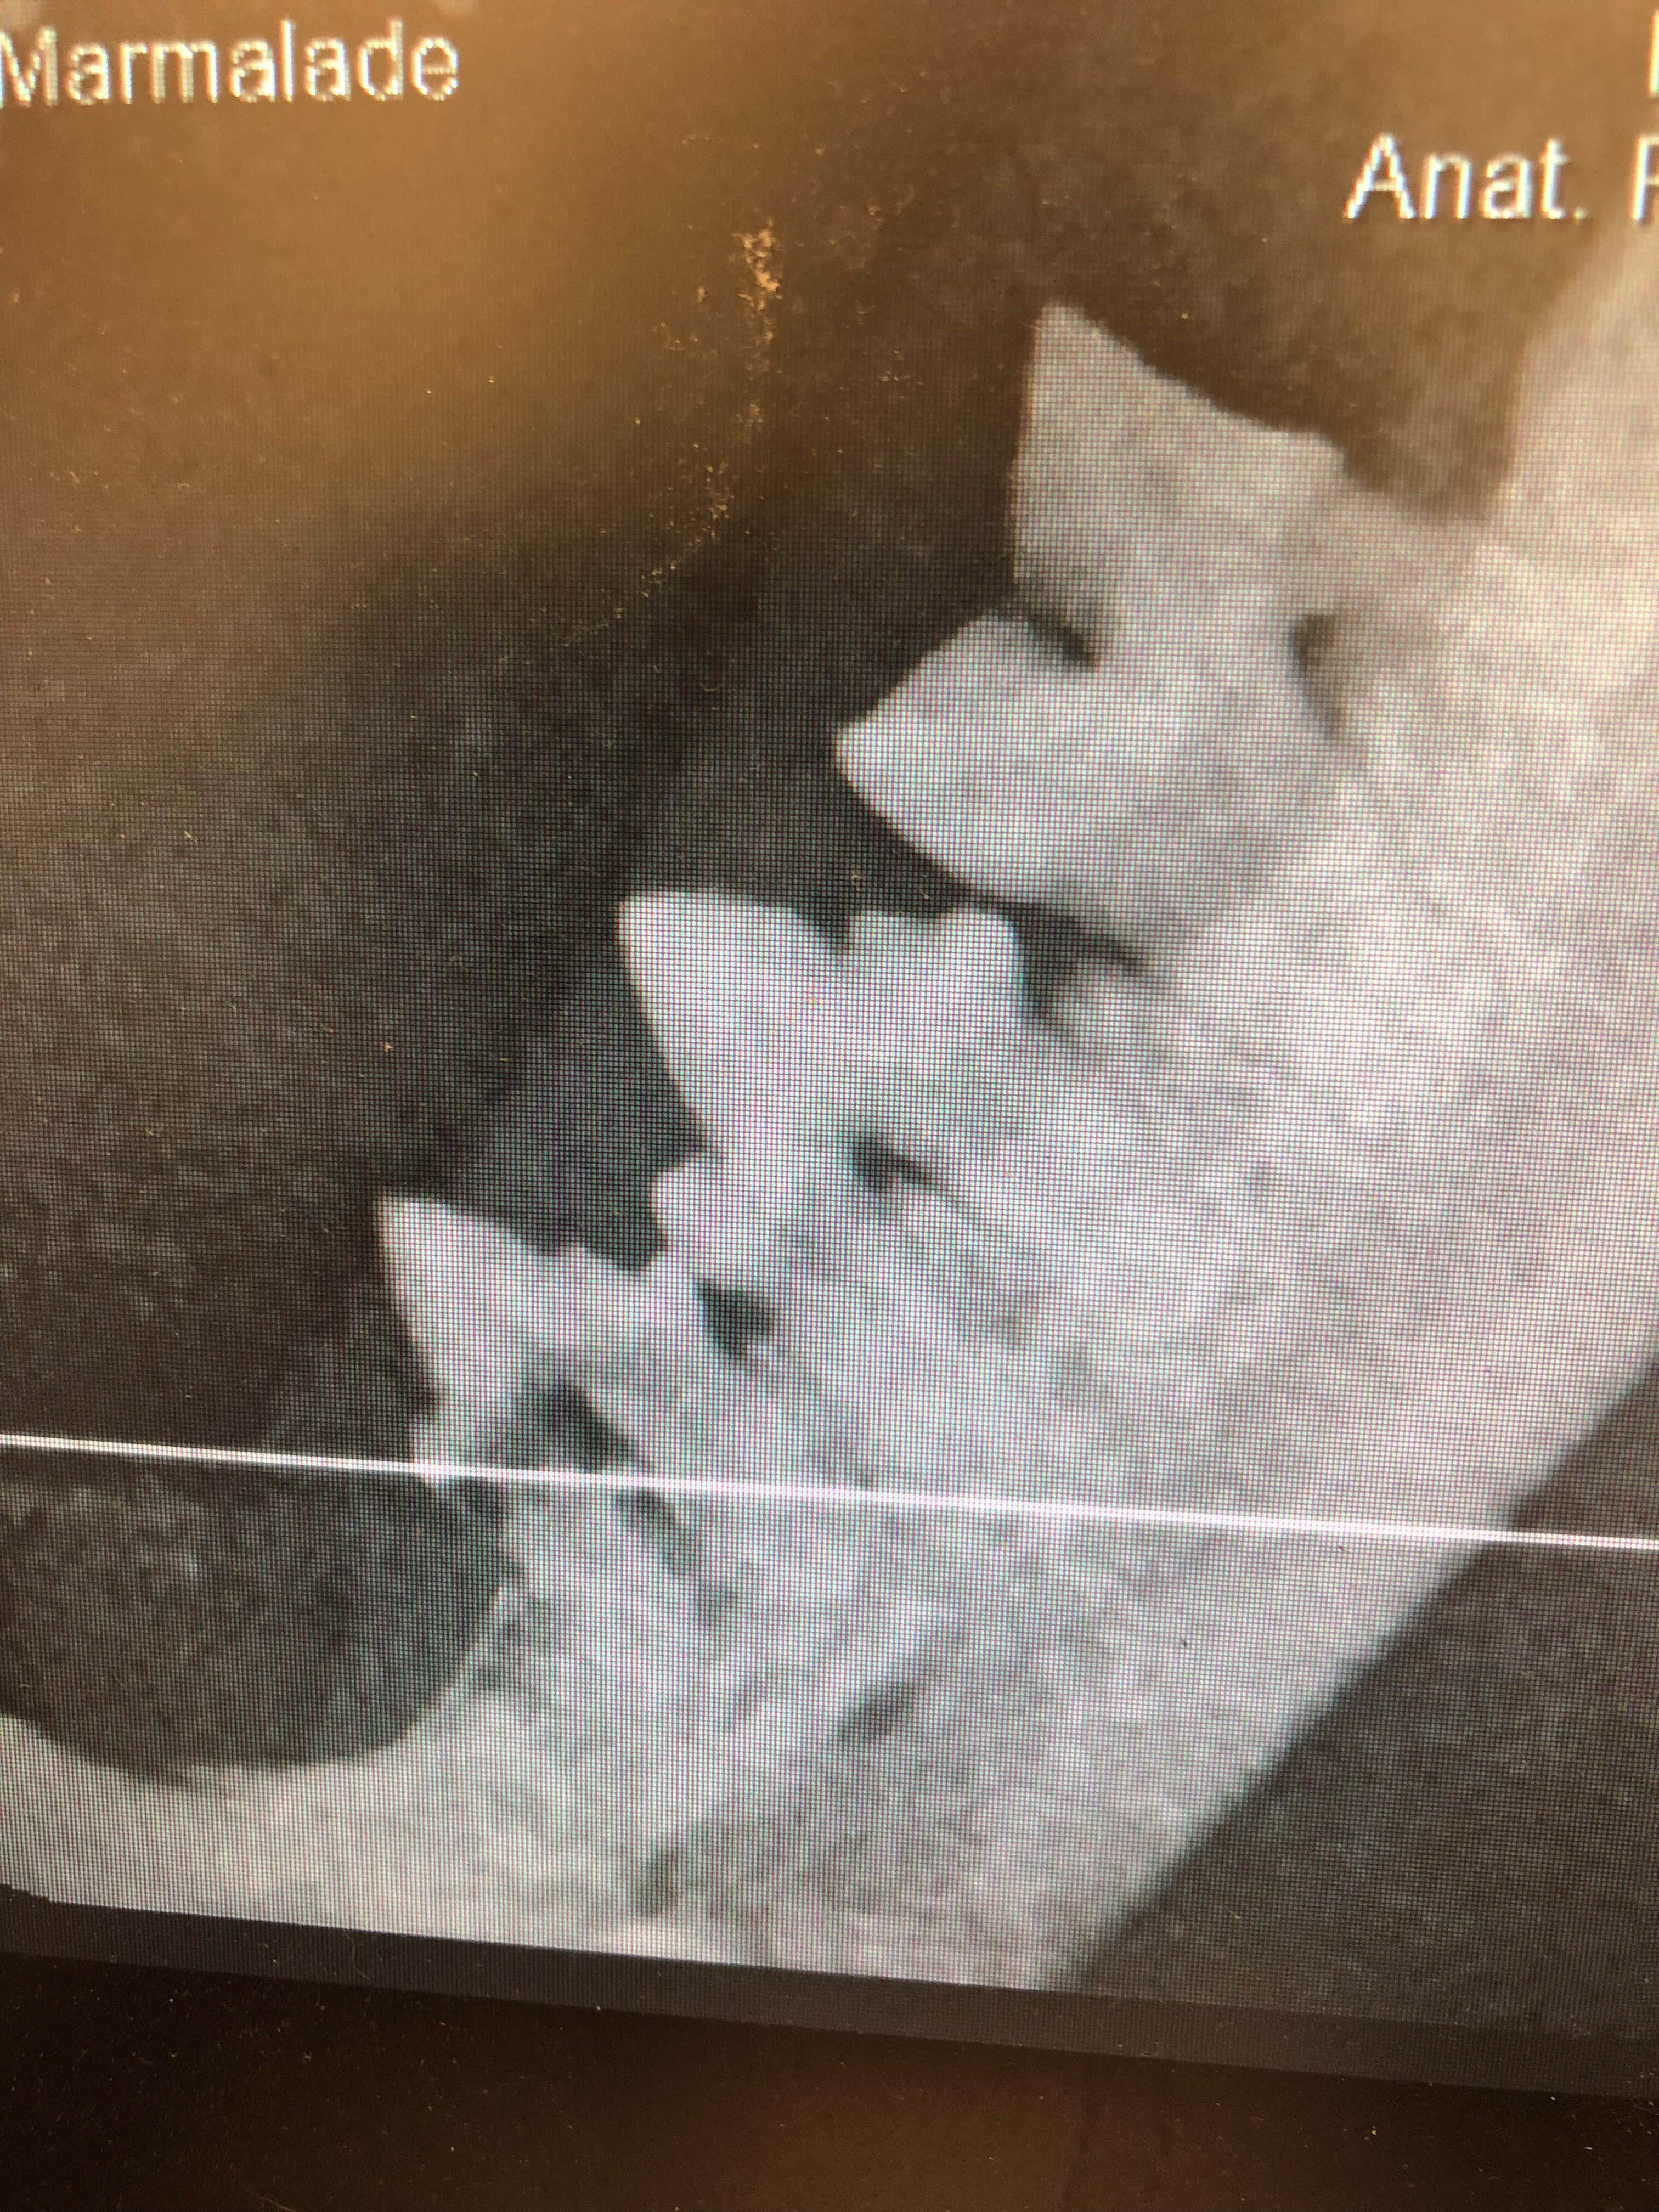 Marmalade's Dental X-rays